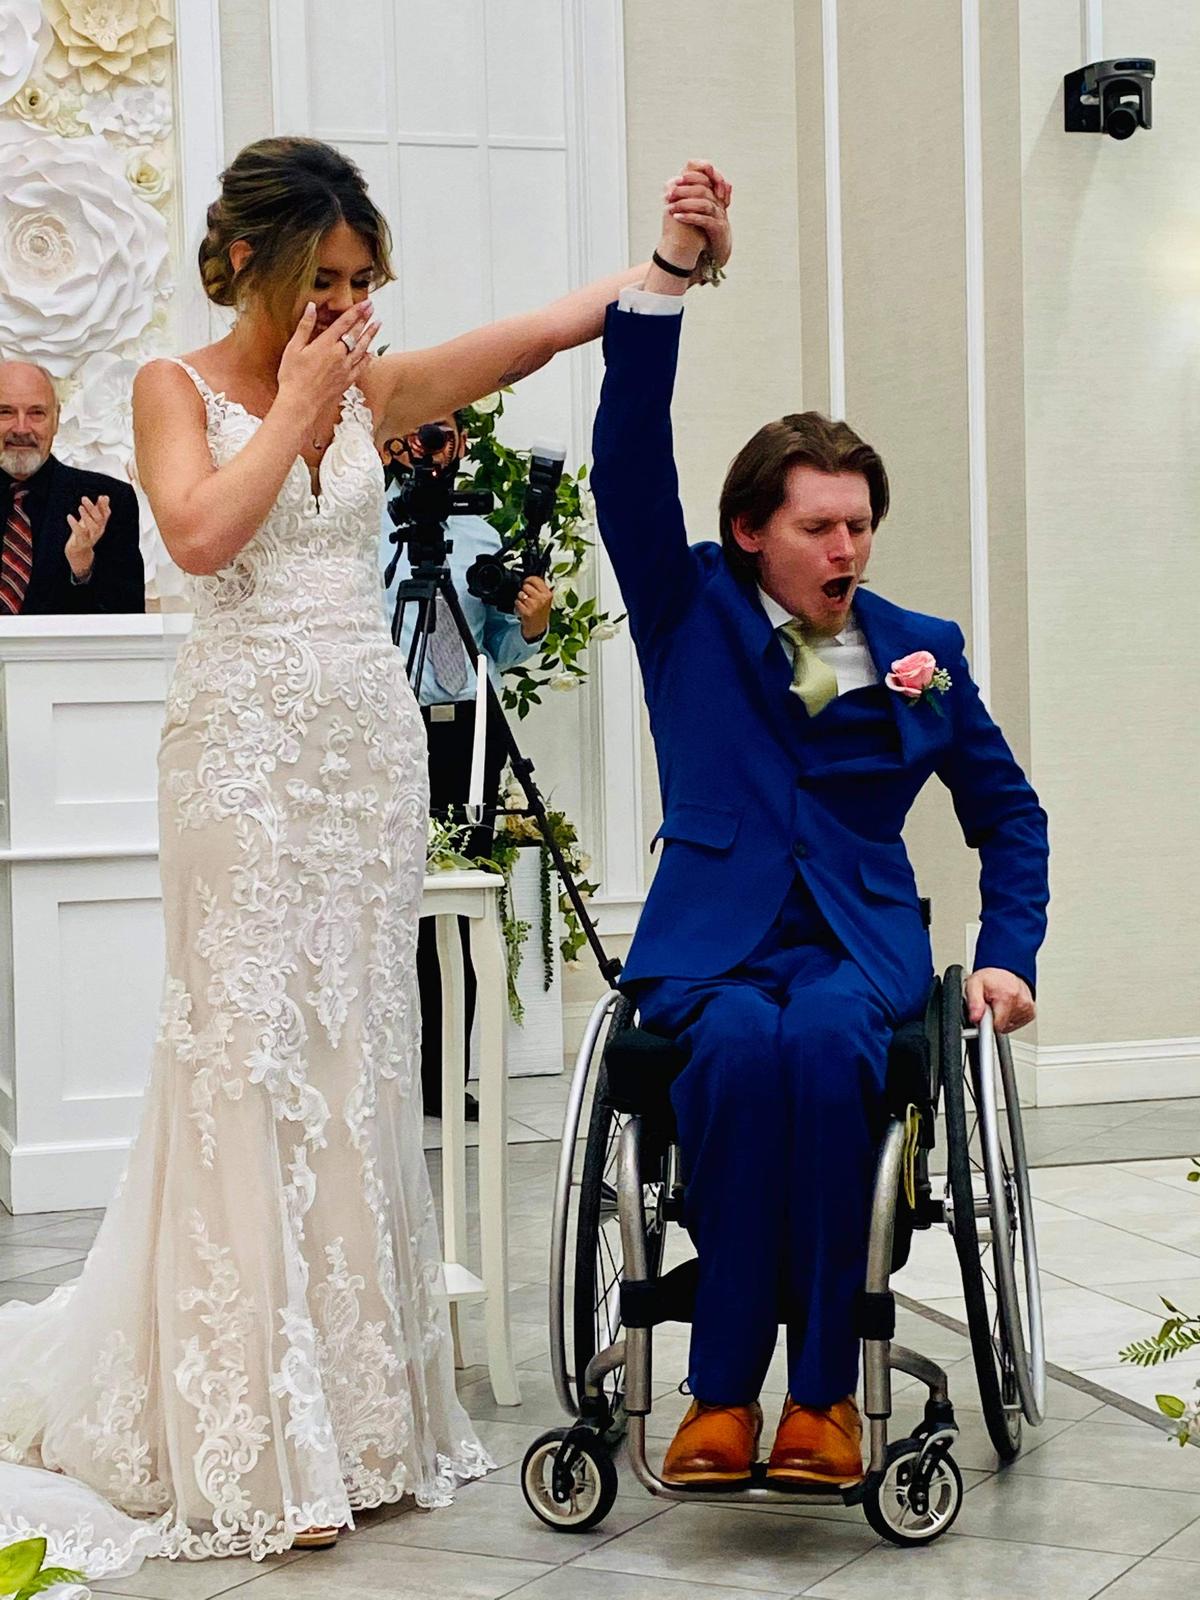 Ryan Estep and Chandler Dendy Estep celebrating their wedding moment when they were pronounced husband and wife. (Courtesy of <a href="https://www.instagram.com/estep_2012/">Ryan Estep</a>)